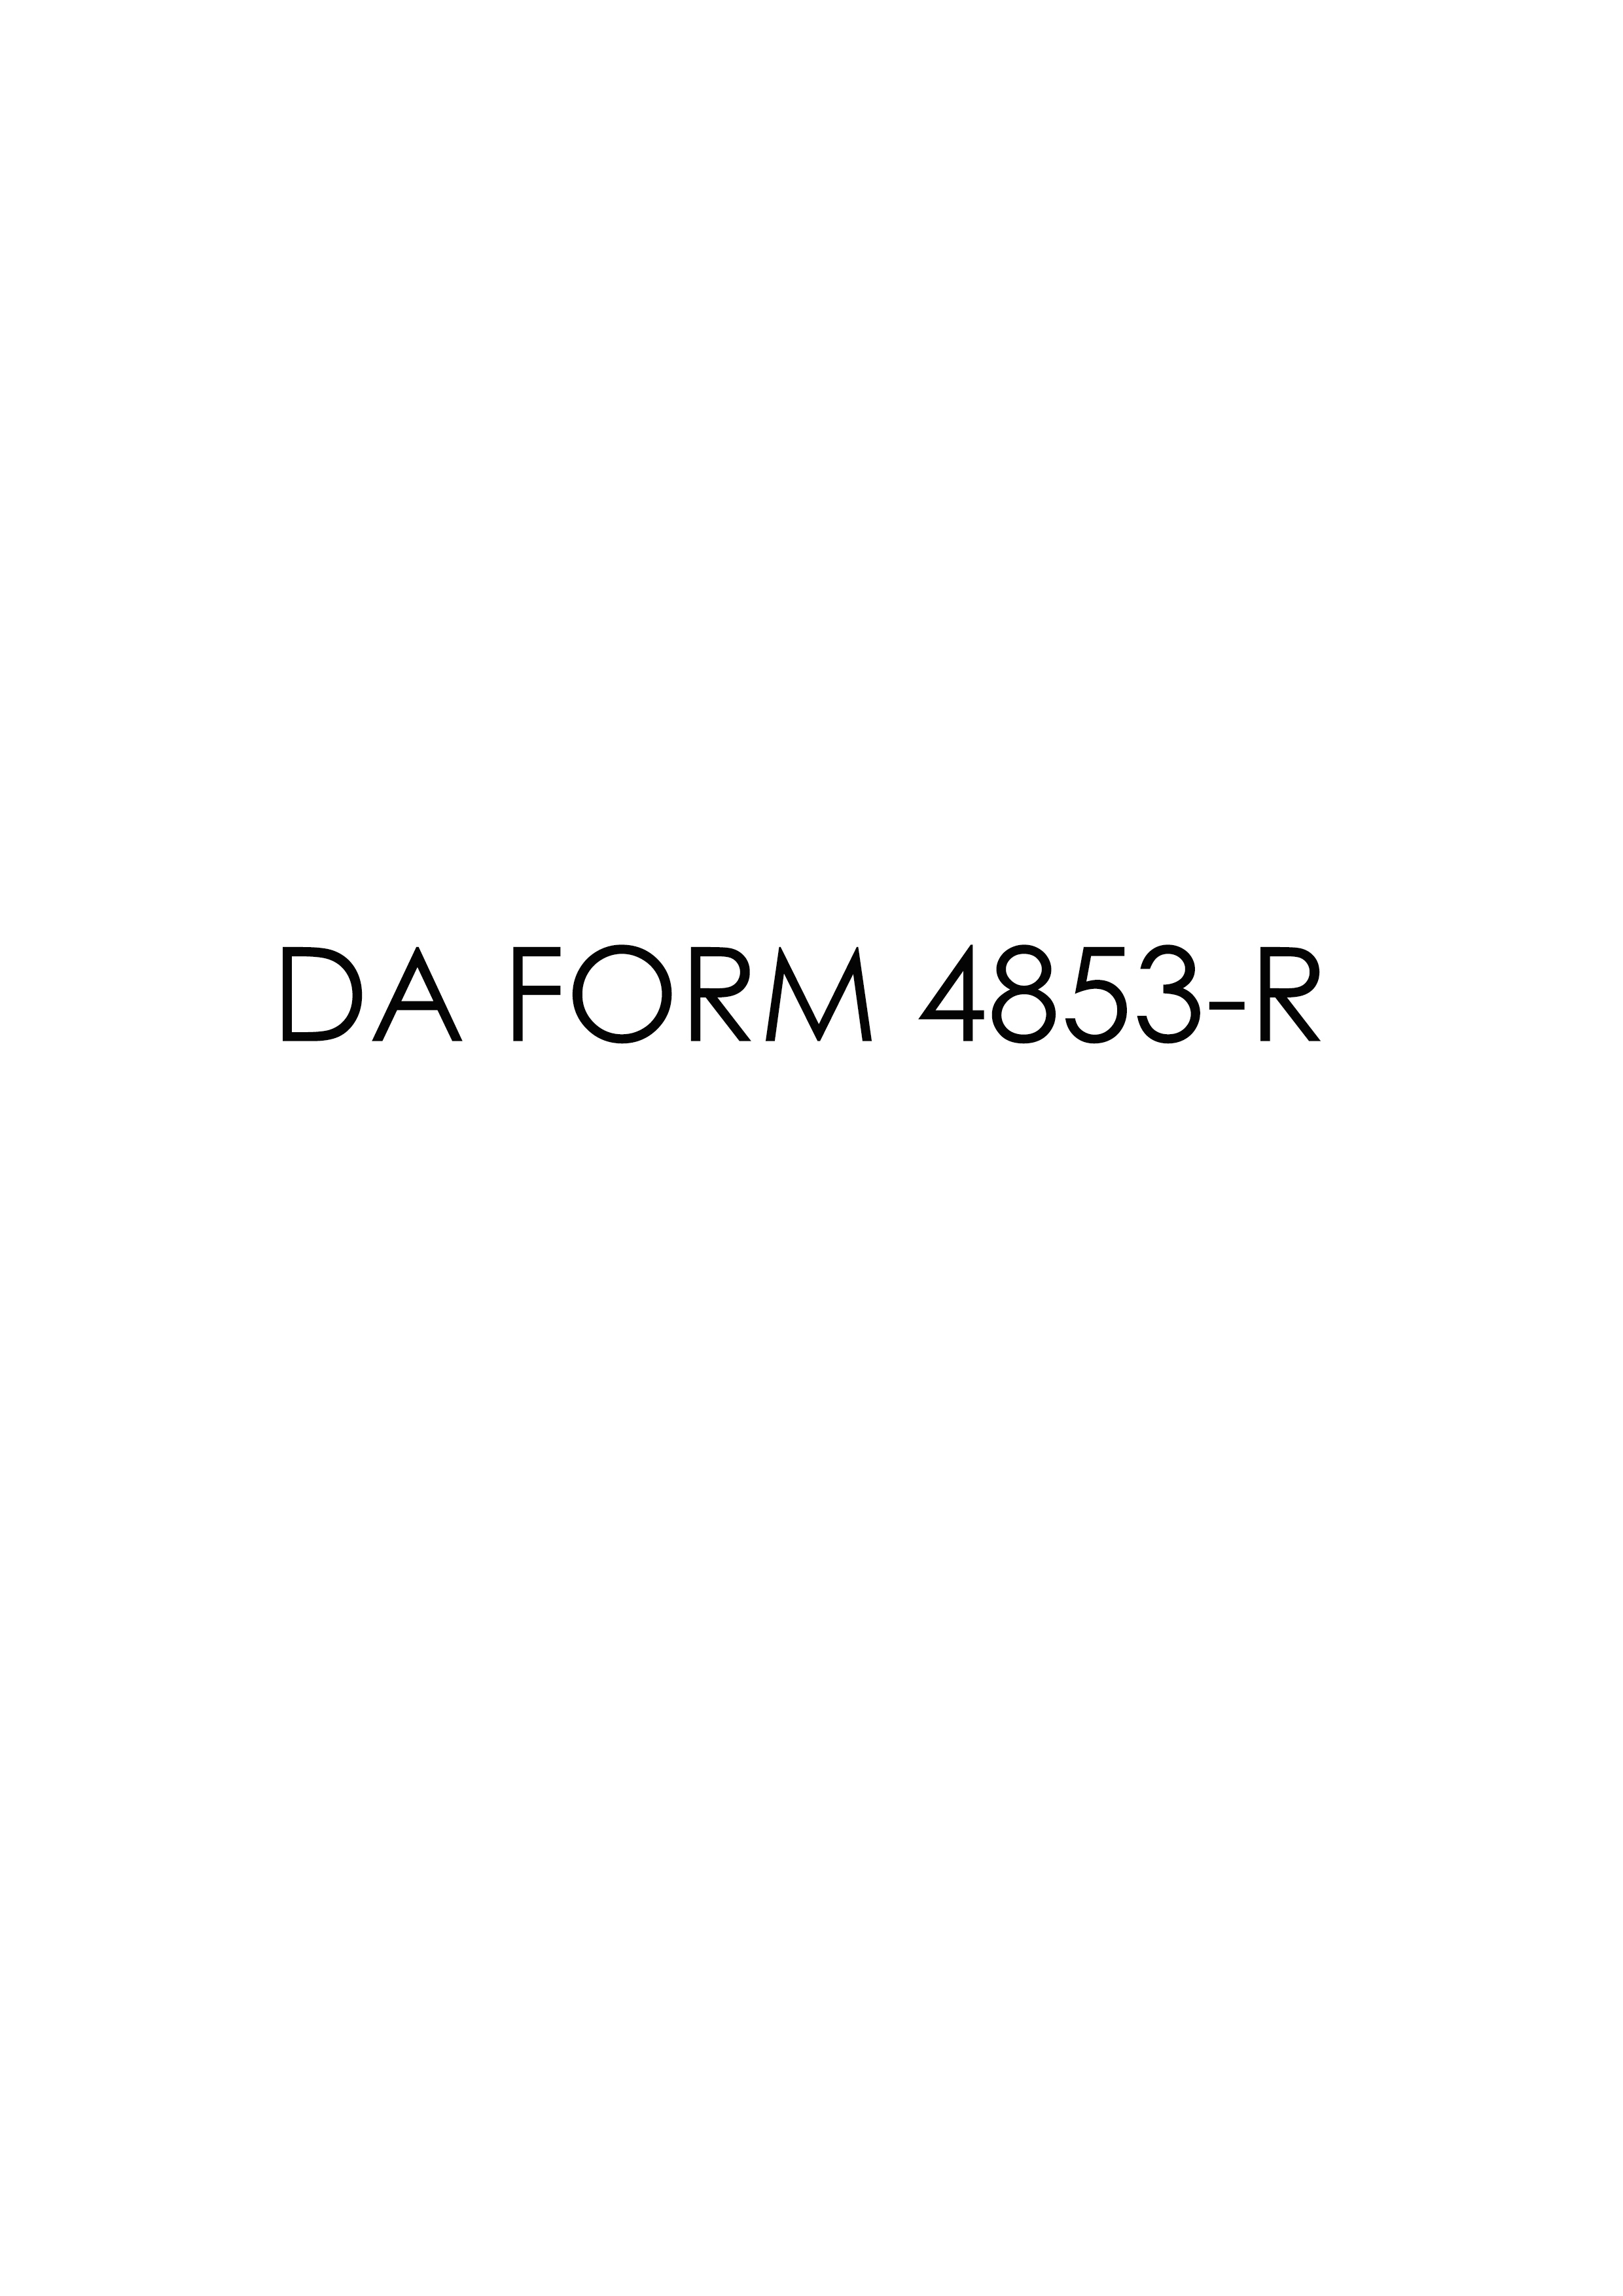 da Form 4853-R fillable